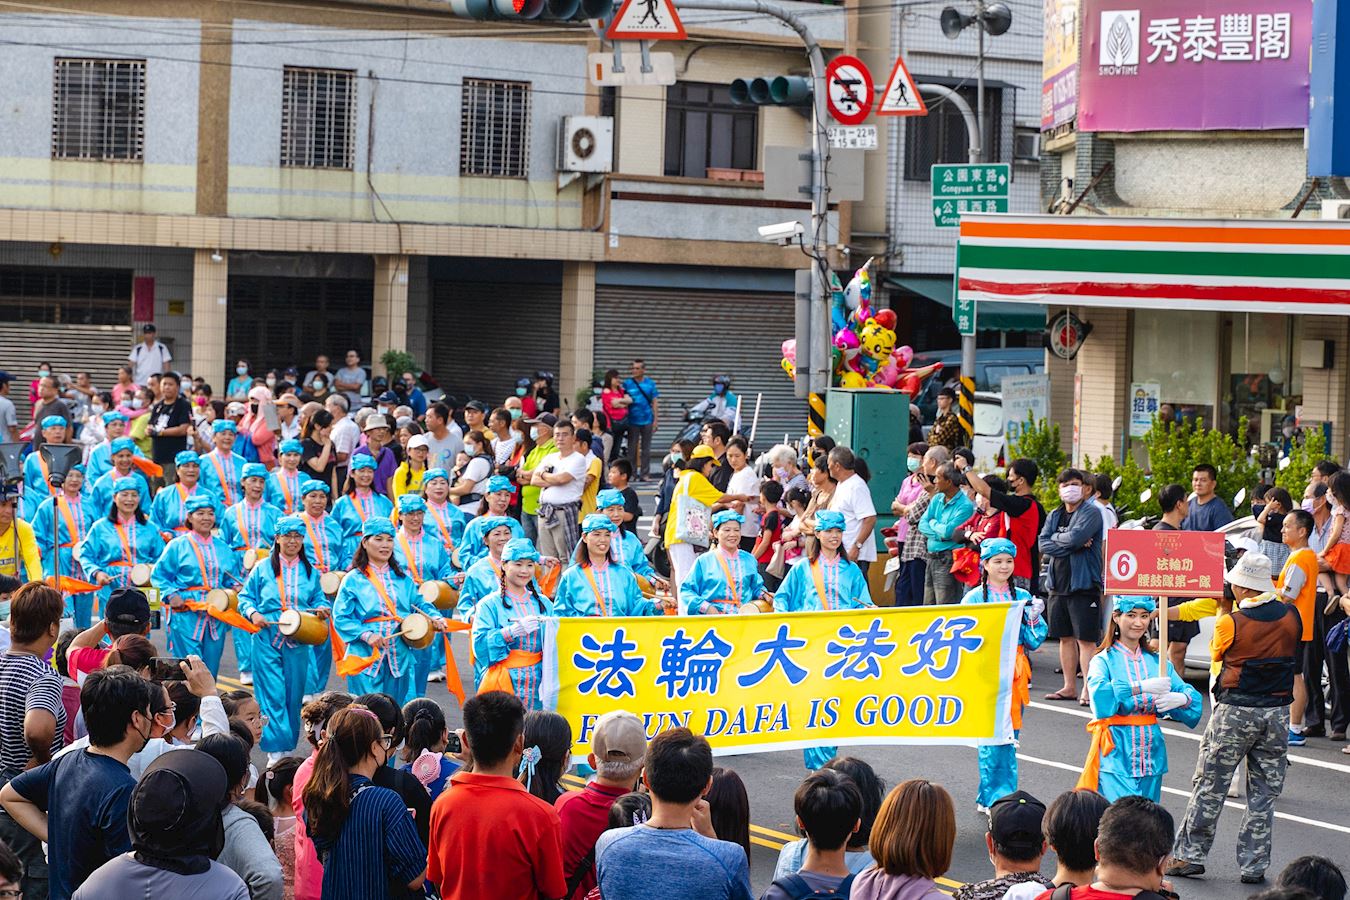 Image for article تایوان: گروه فالون دافا در جریان جشنواره بین‌المللی فرهنگی در کائوسیونگ مورد تحسین قرار گرفت